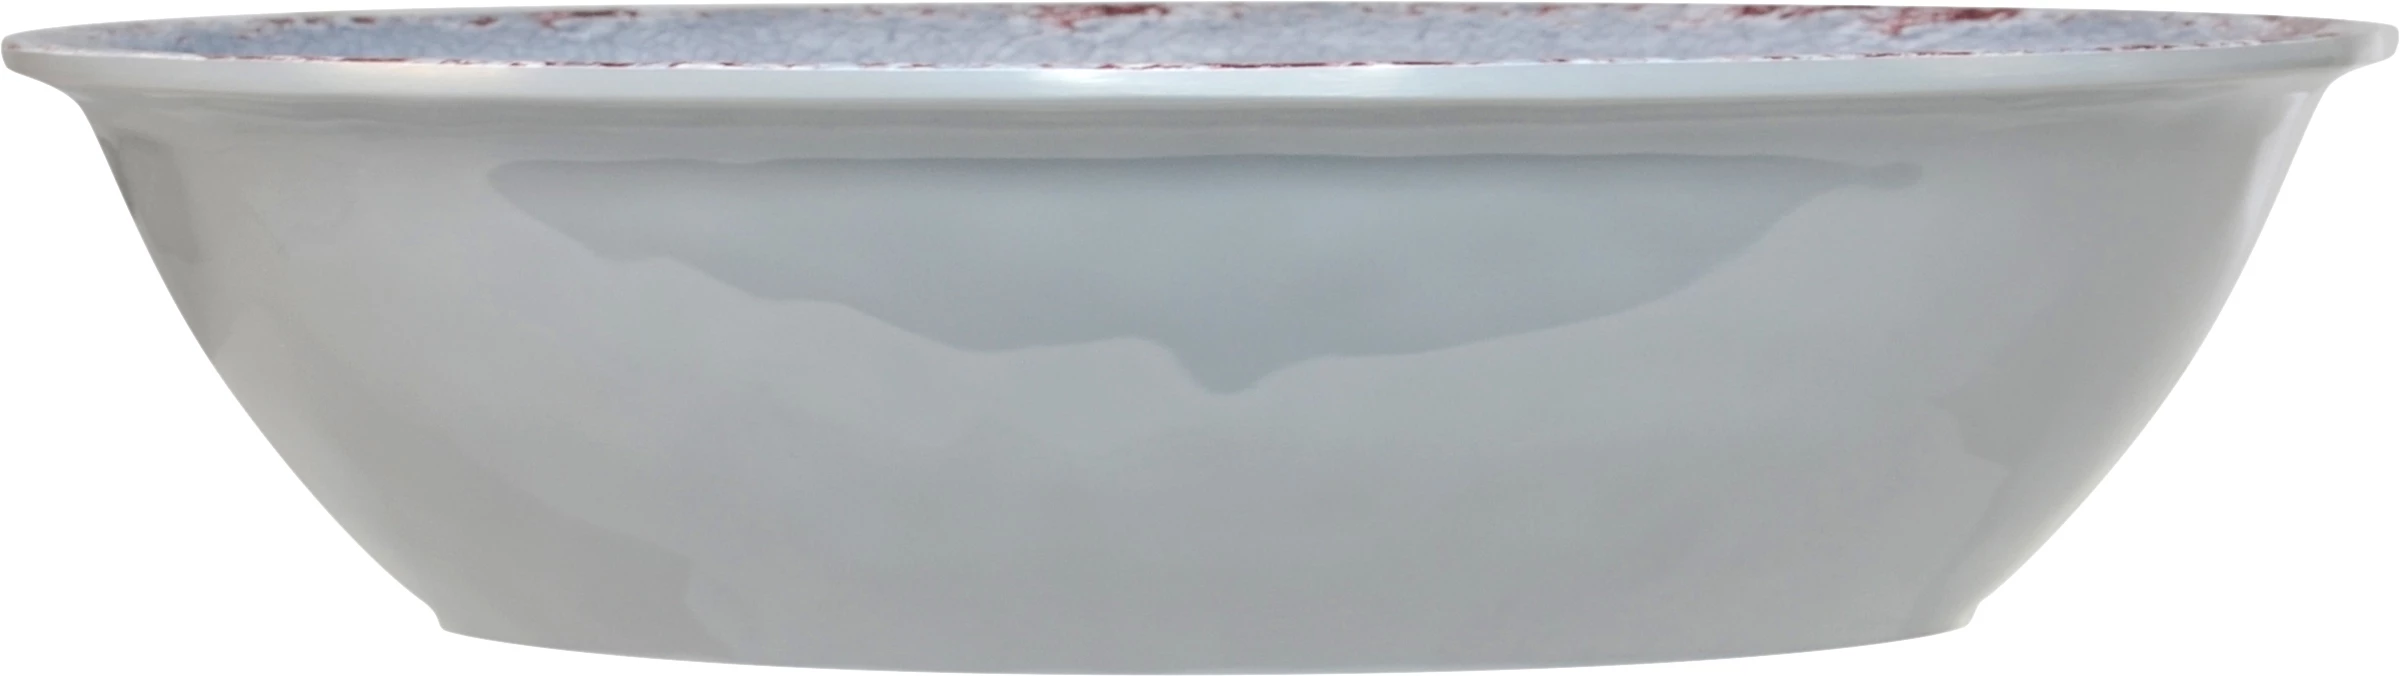 Dalebrook Casablanca skål, grå, 150 cl, 28 x 21 cm